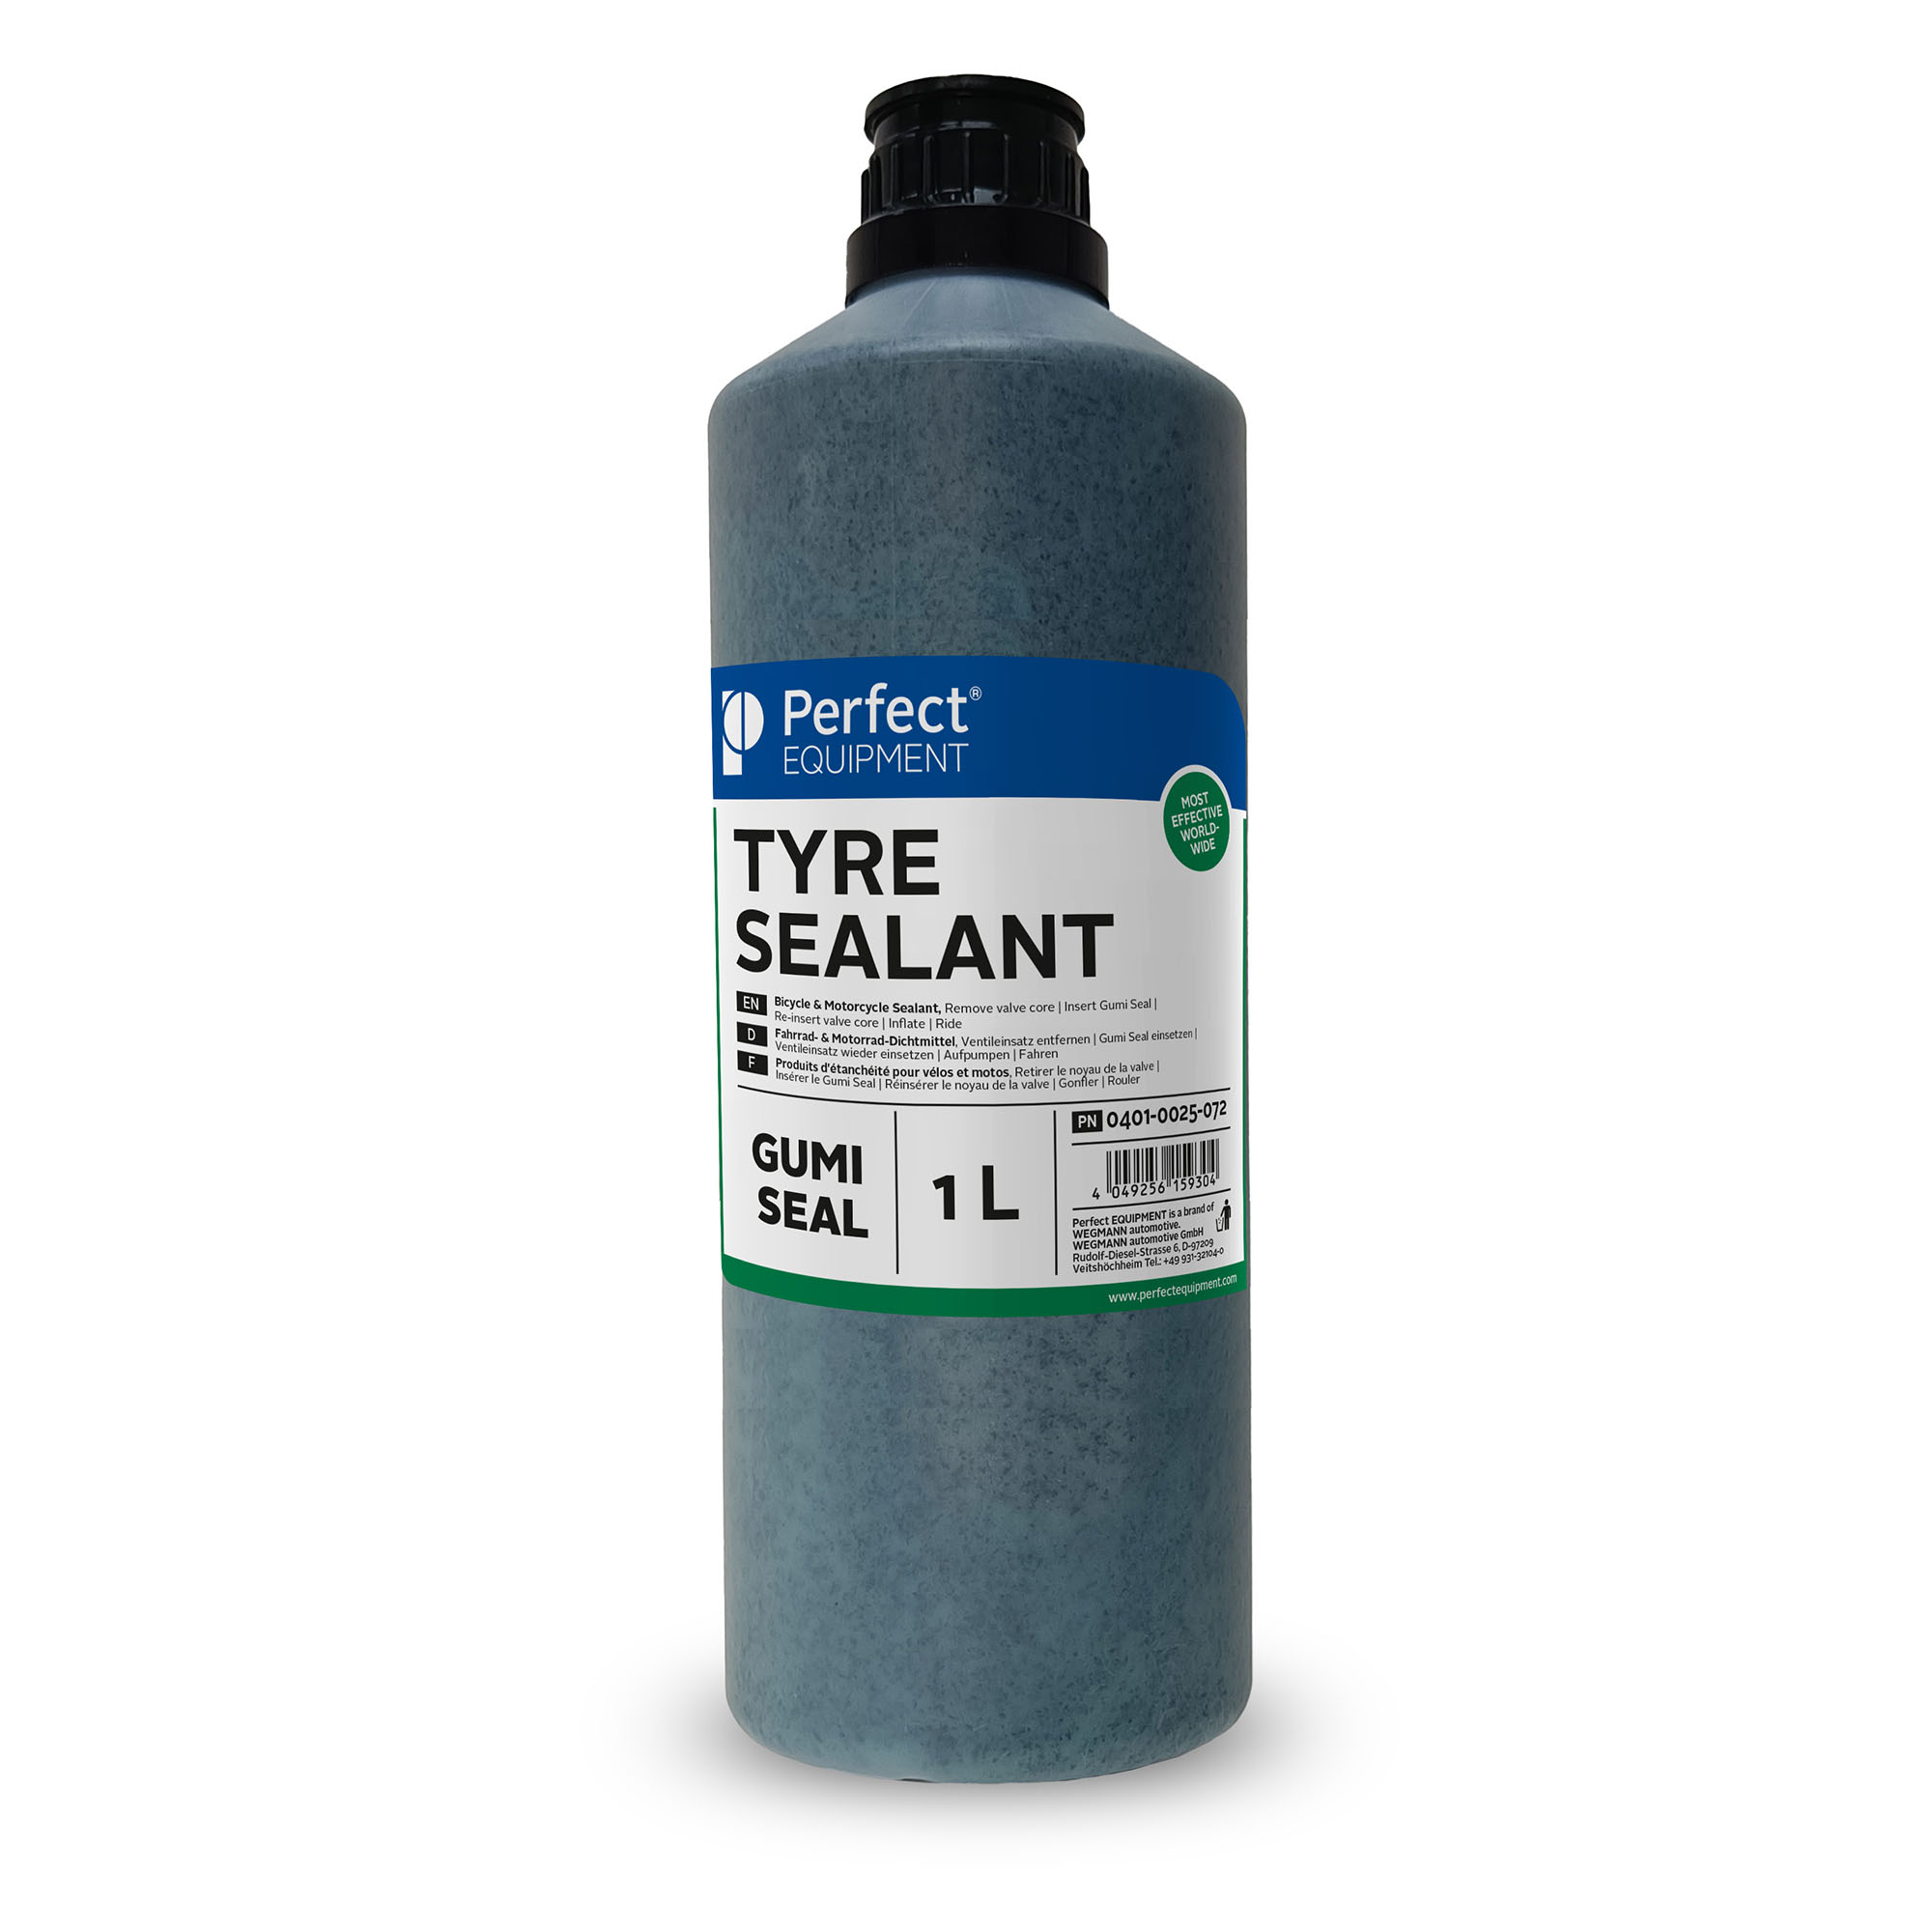 Perfect EQUIPMENT-Reifendichtmittel -Gumi Seal, 1l, Flasche-0401-0025-072